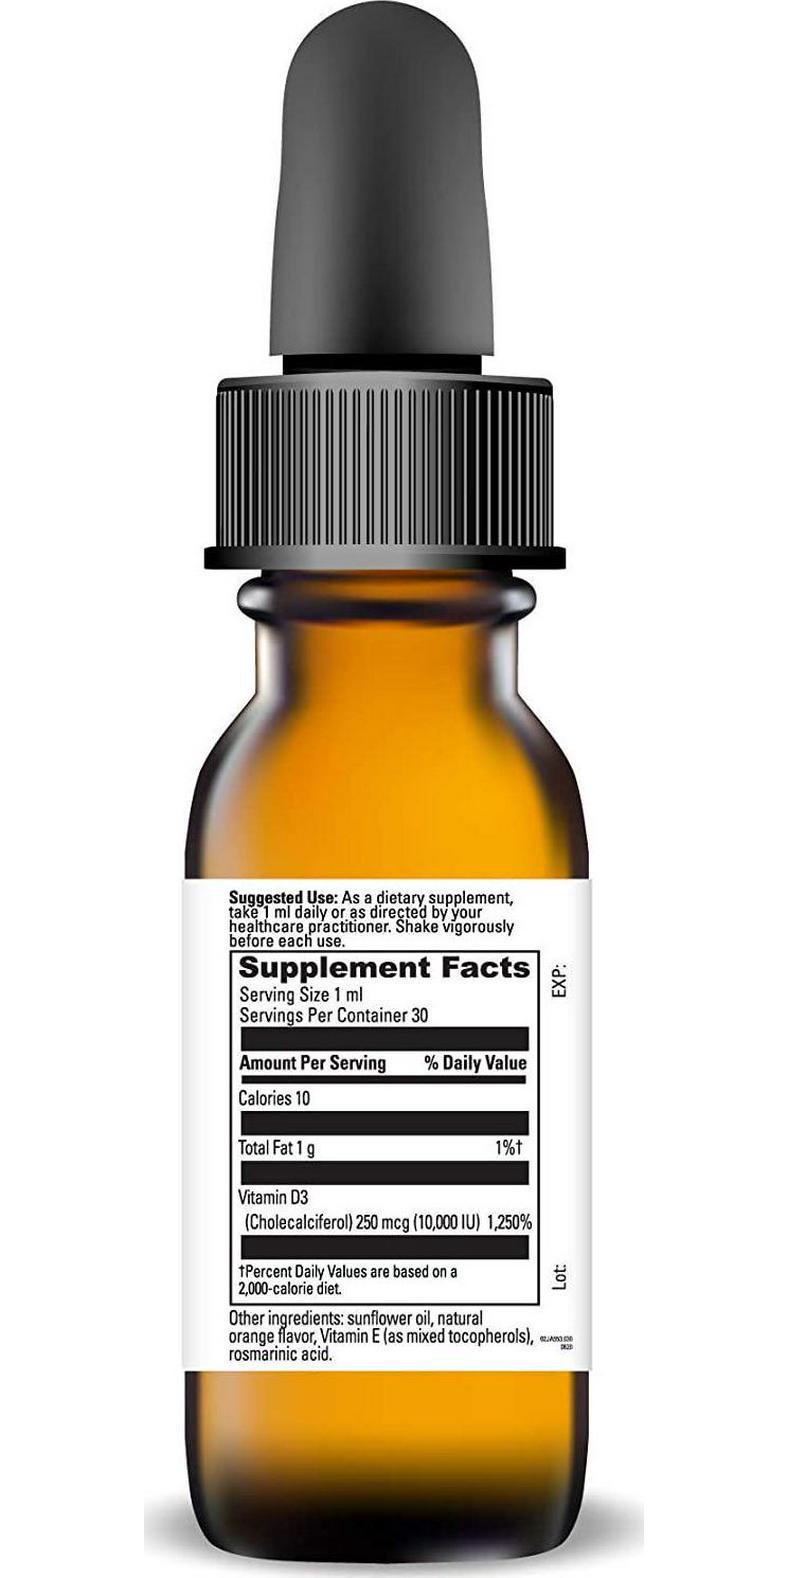 Power By Naturals - Highest Potency Liquid Vitamin D 10000 iu - Liquid Vitamin D Drops for Best Absorption - D Vitamins Immune Support - 2000 iu /Spray - (30 ml Orange Flavor) of VIT D3 (1 Bottle)